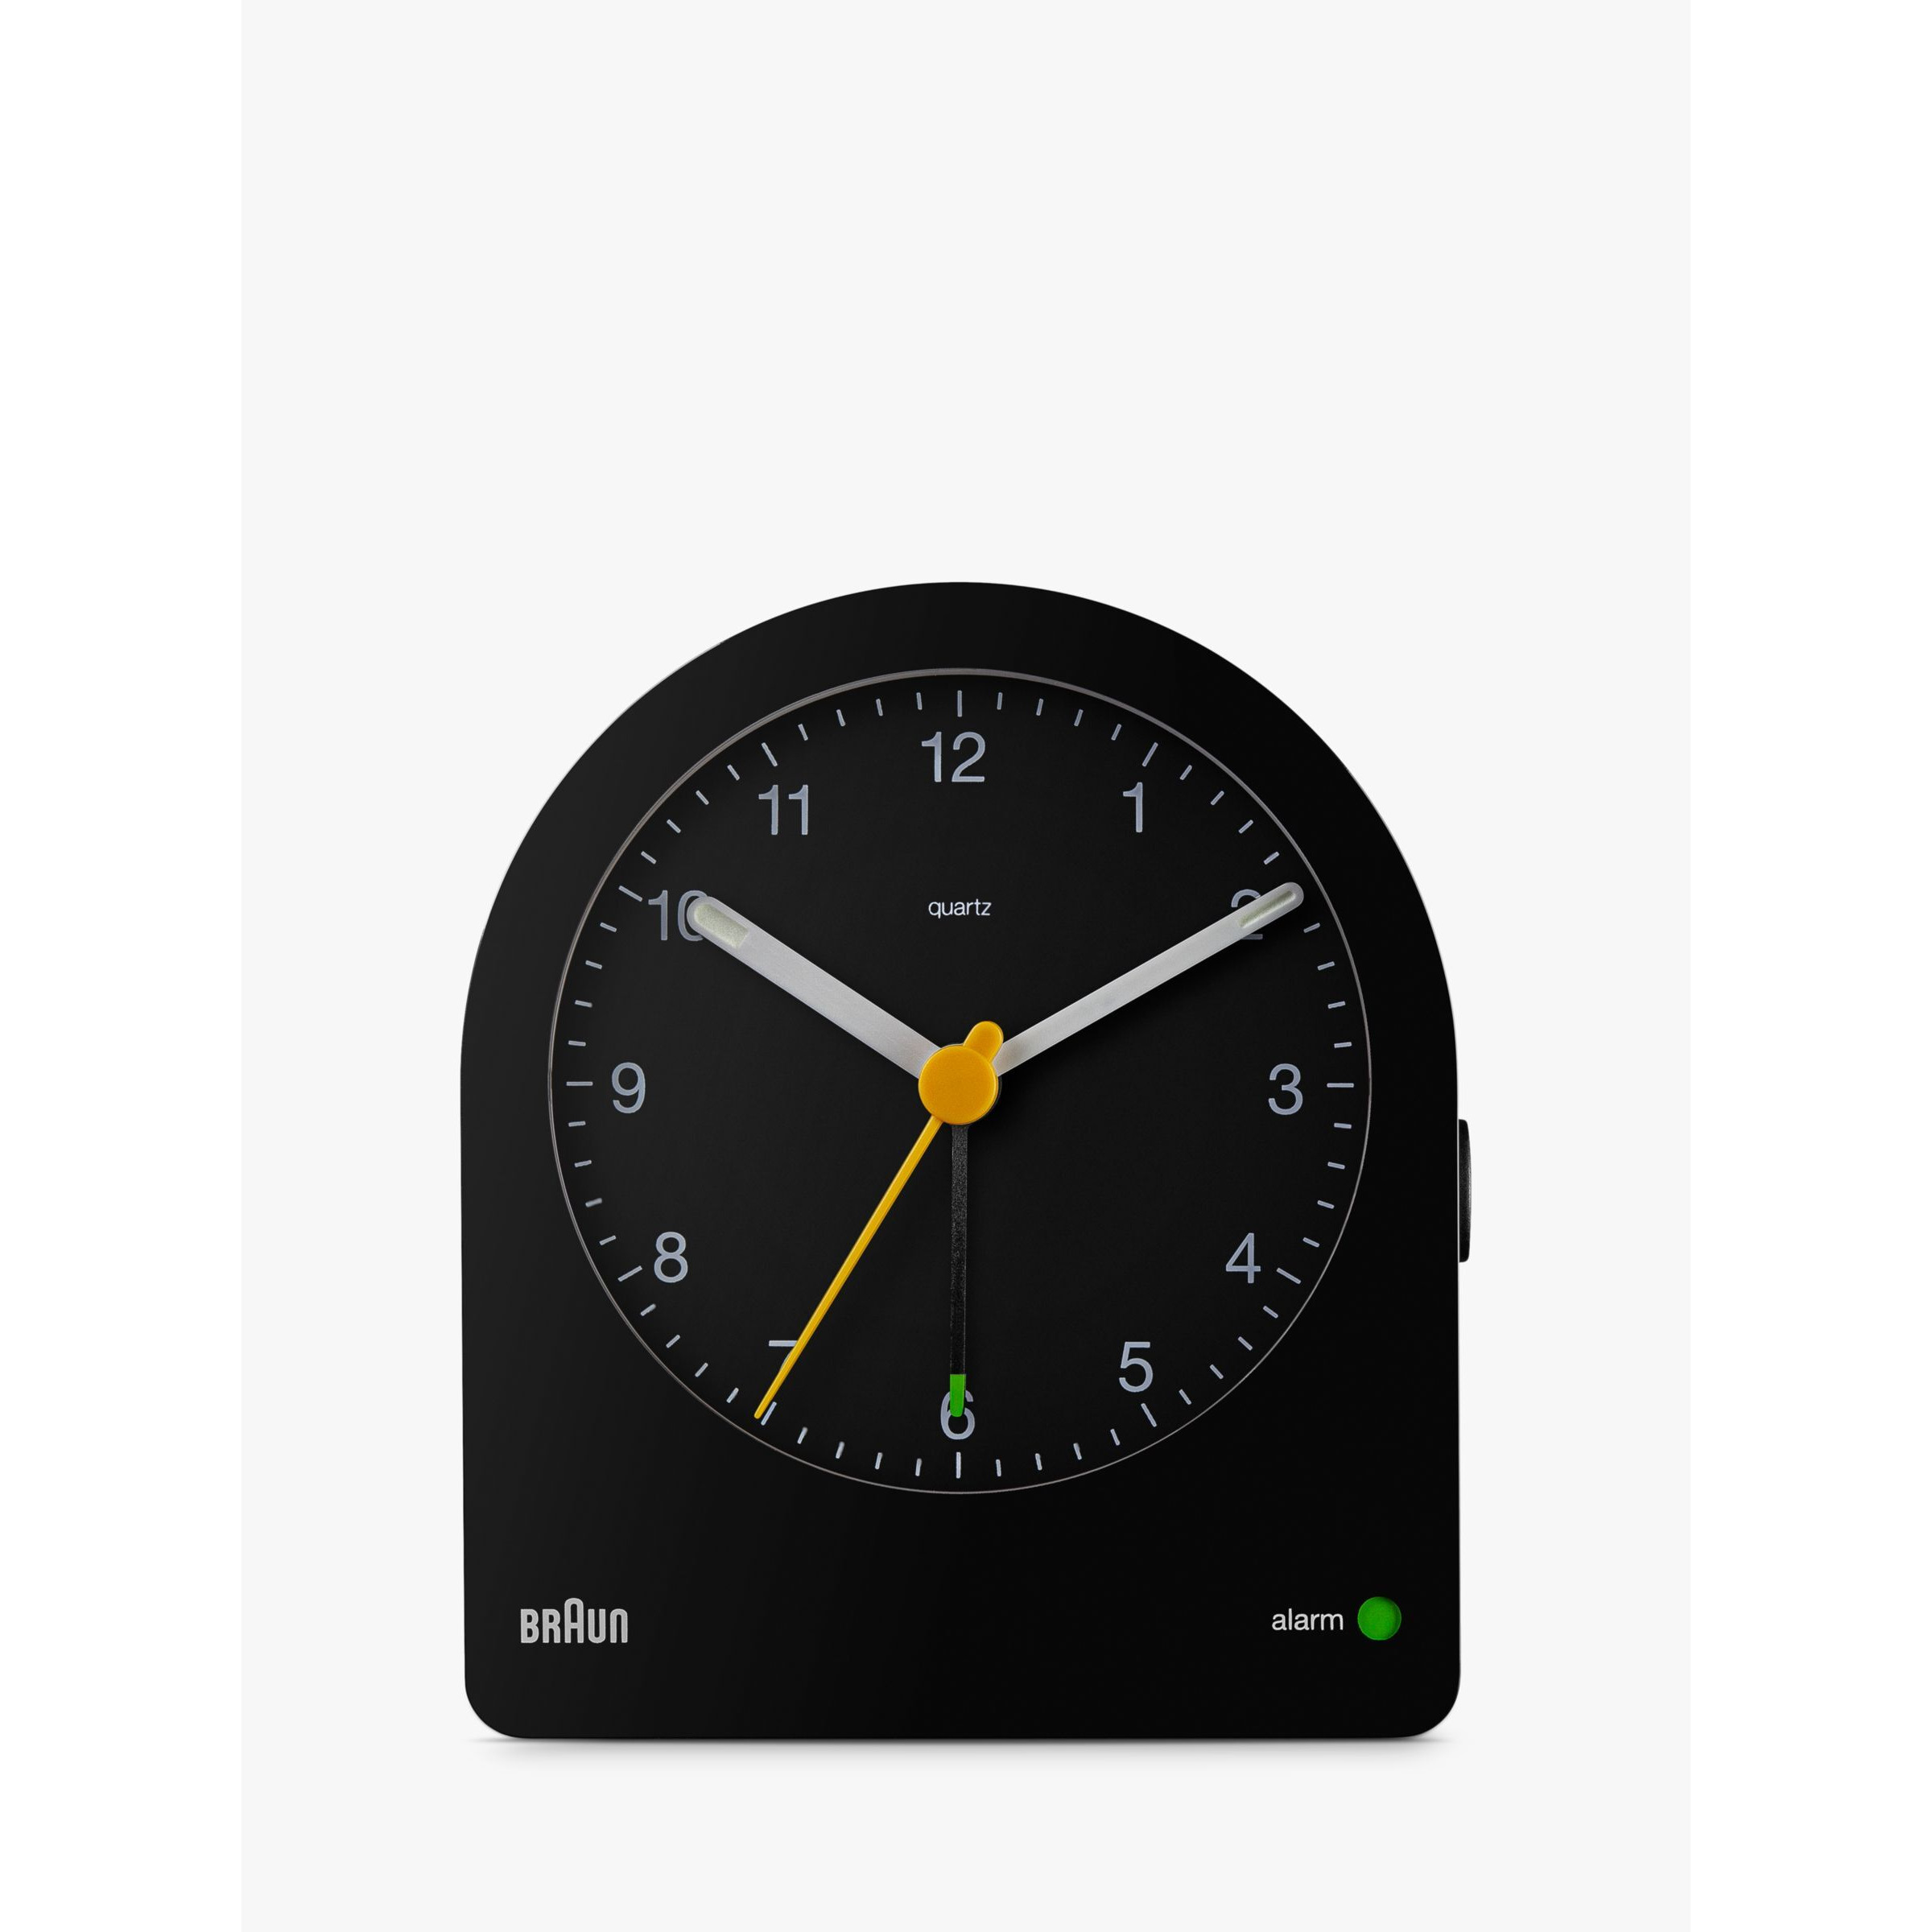 Braun Analogue Alarm Clock, Black - image 1